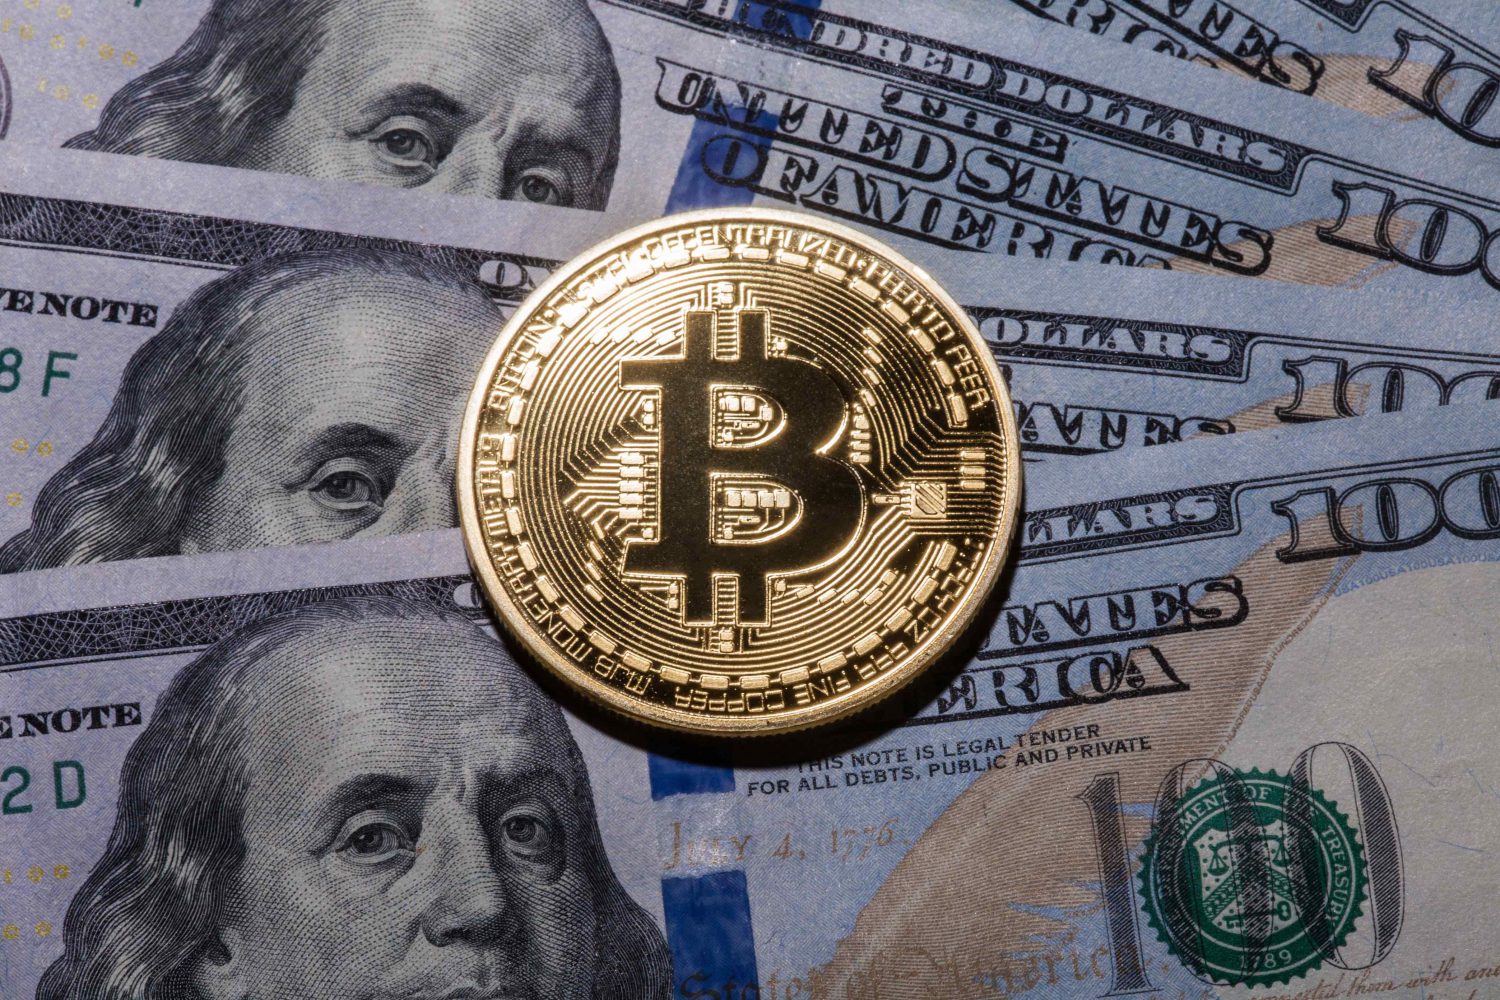 How many bitcoins are in a dollar биткоин в реальном времени торги